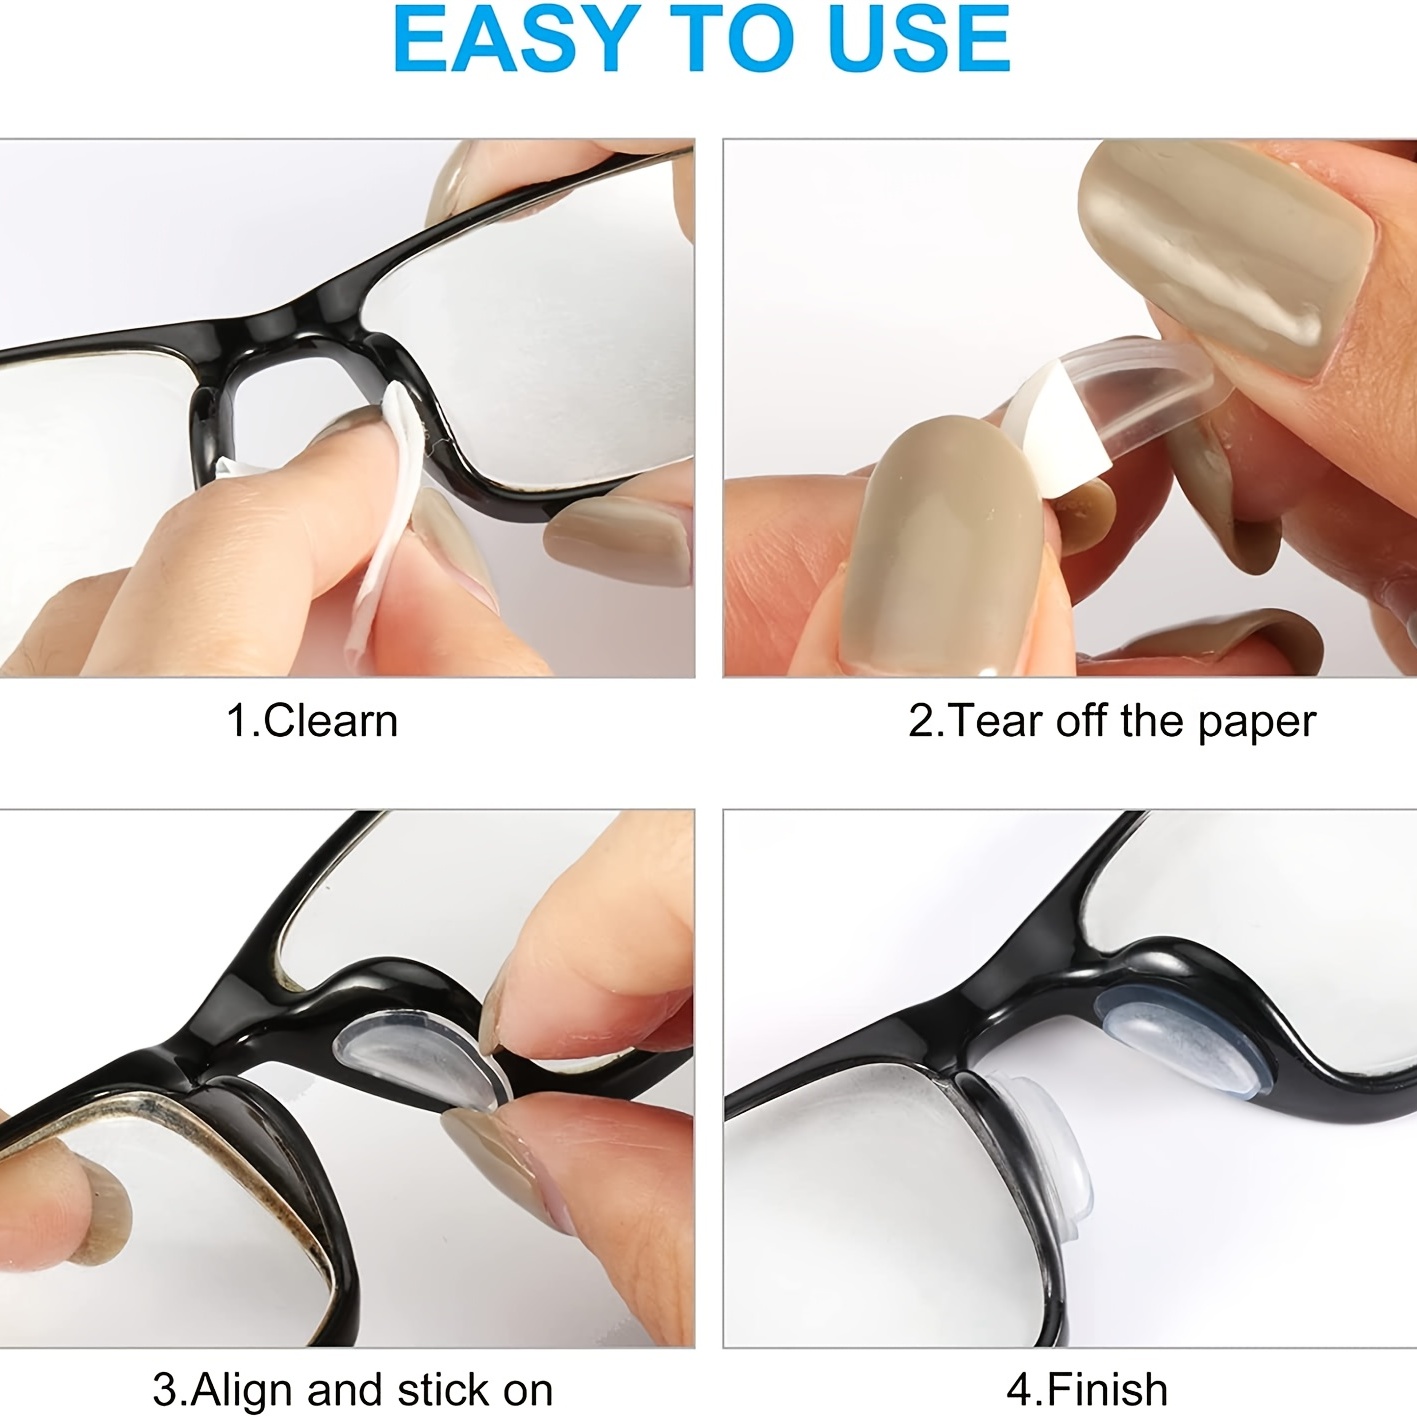 10 Pairs Eyeglasses Nose Pads Glasses Adhesive Silicone Anti-Slip